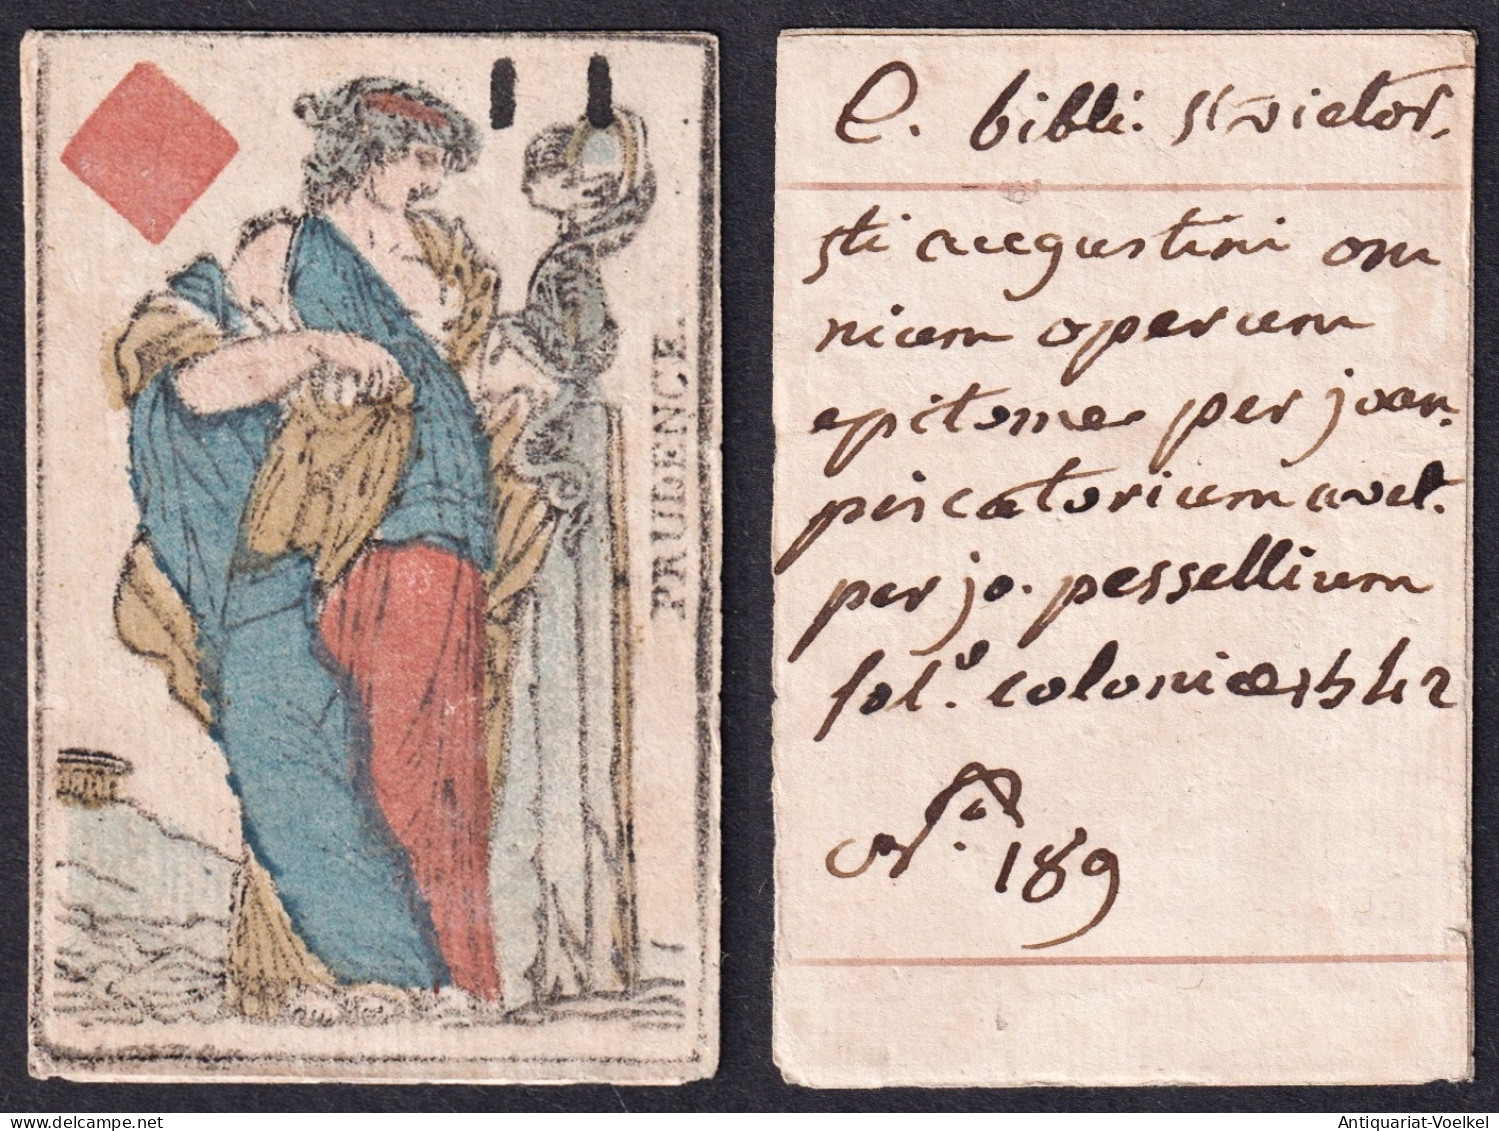 (Karo-Dame) - Queen Of Diamonds / Reine De Carreau / Playing Card Carte A Jouer Spielkarte Cards Cartes - Oud Speelgoed